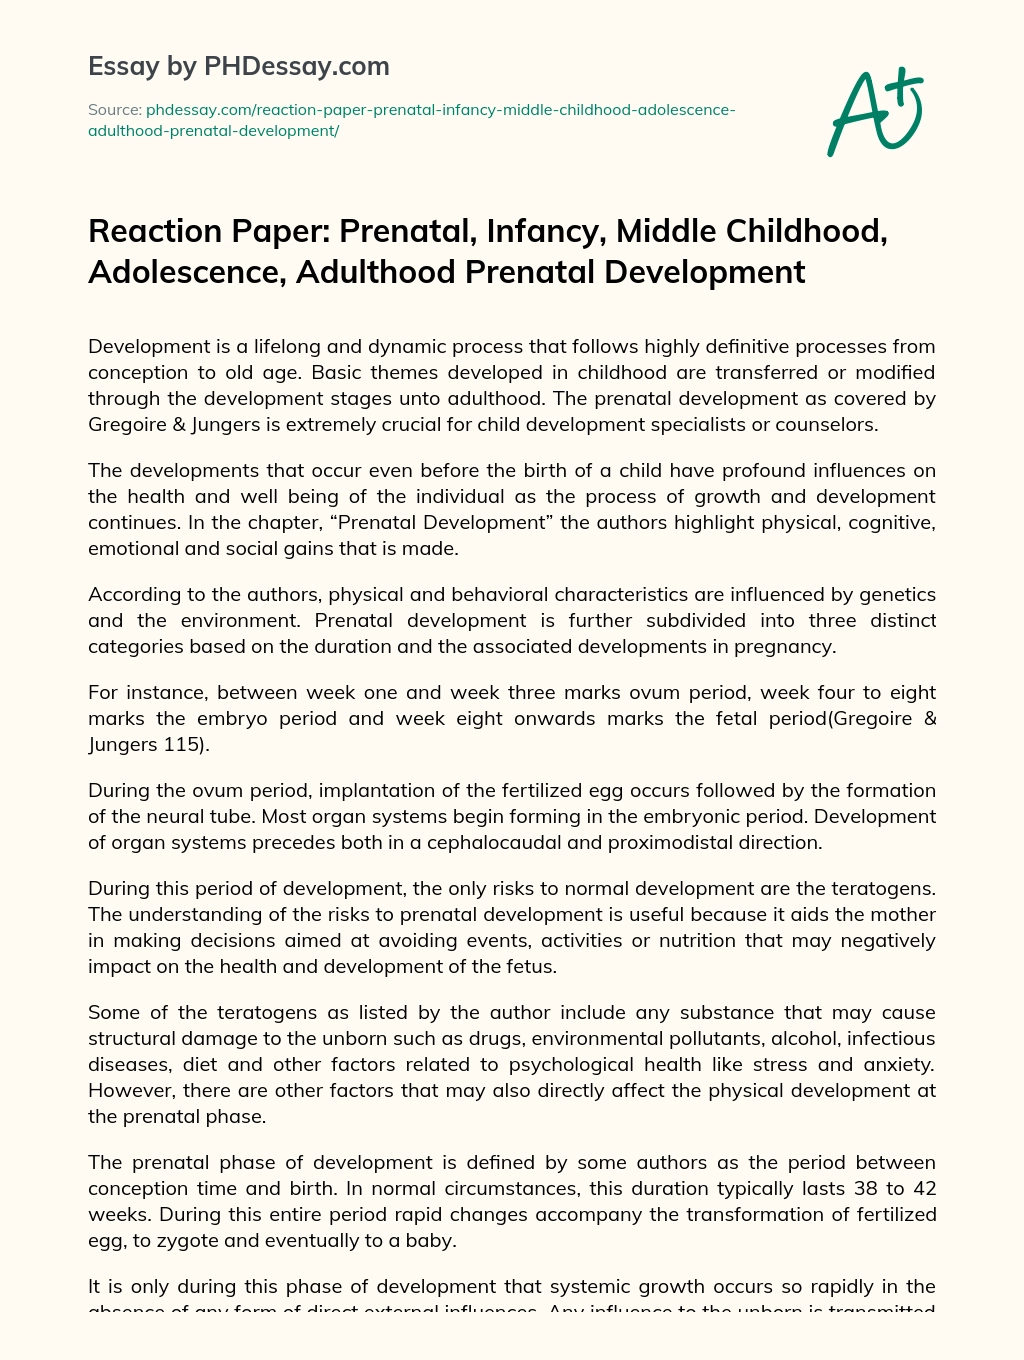 Reaction Paper: Prenatal, Infancy, Middle Childhood, Adolescence, Adulthood Prenatal Development essay